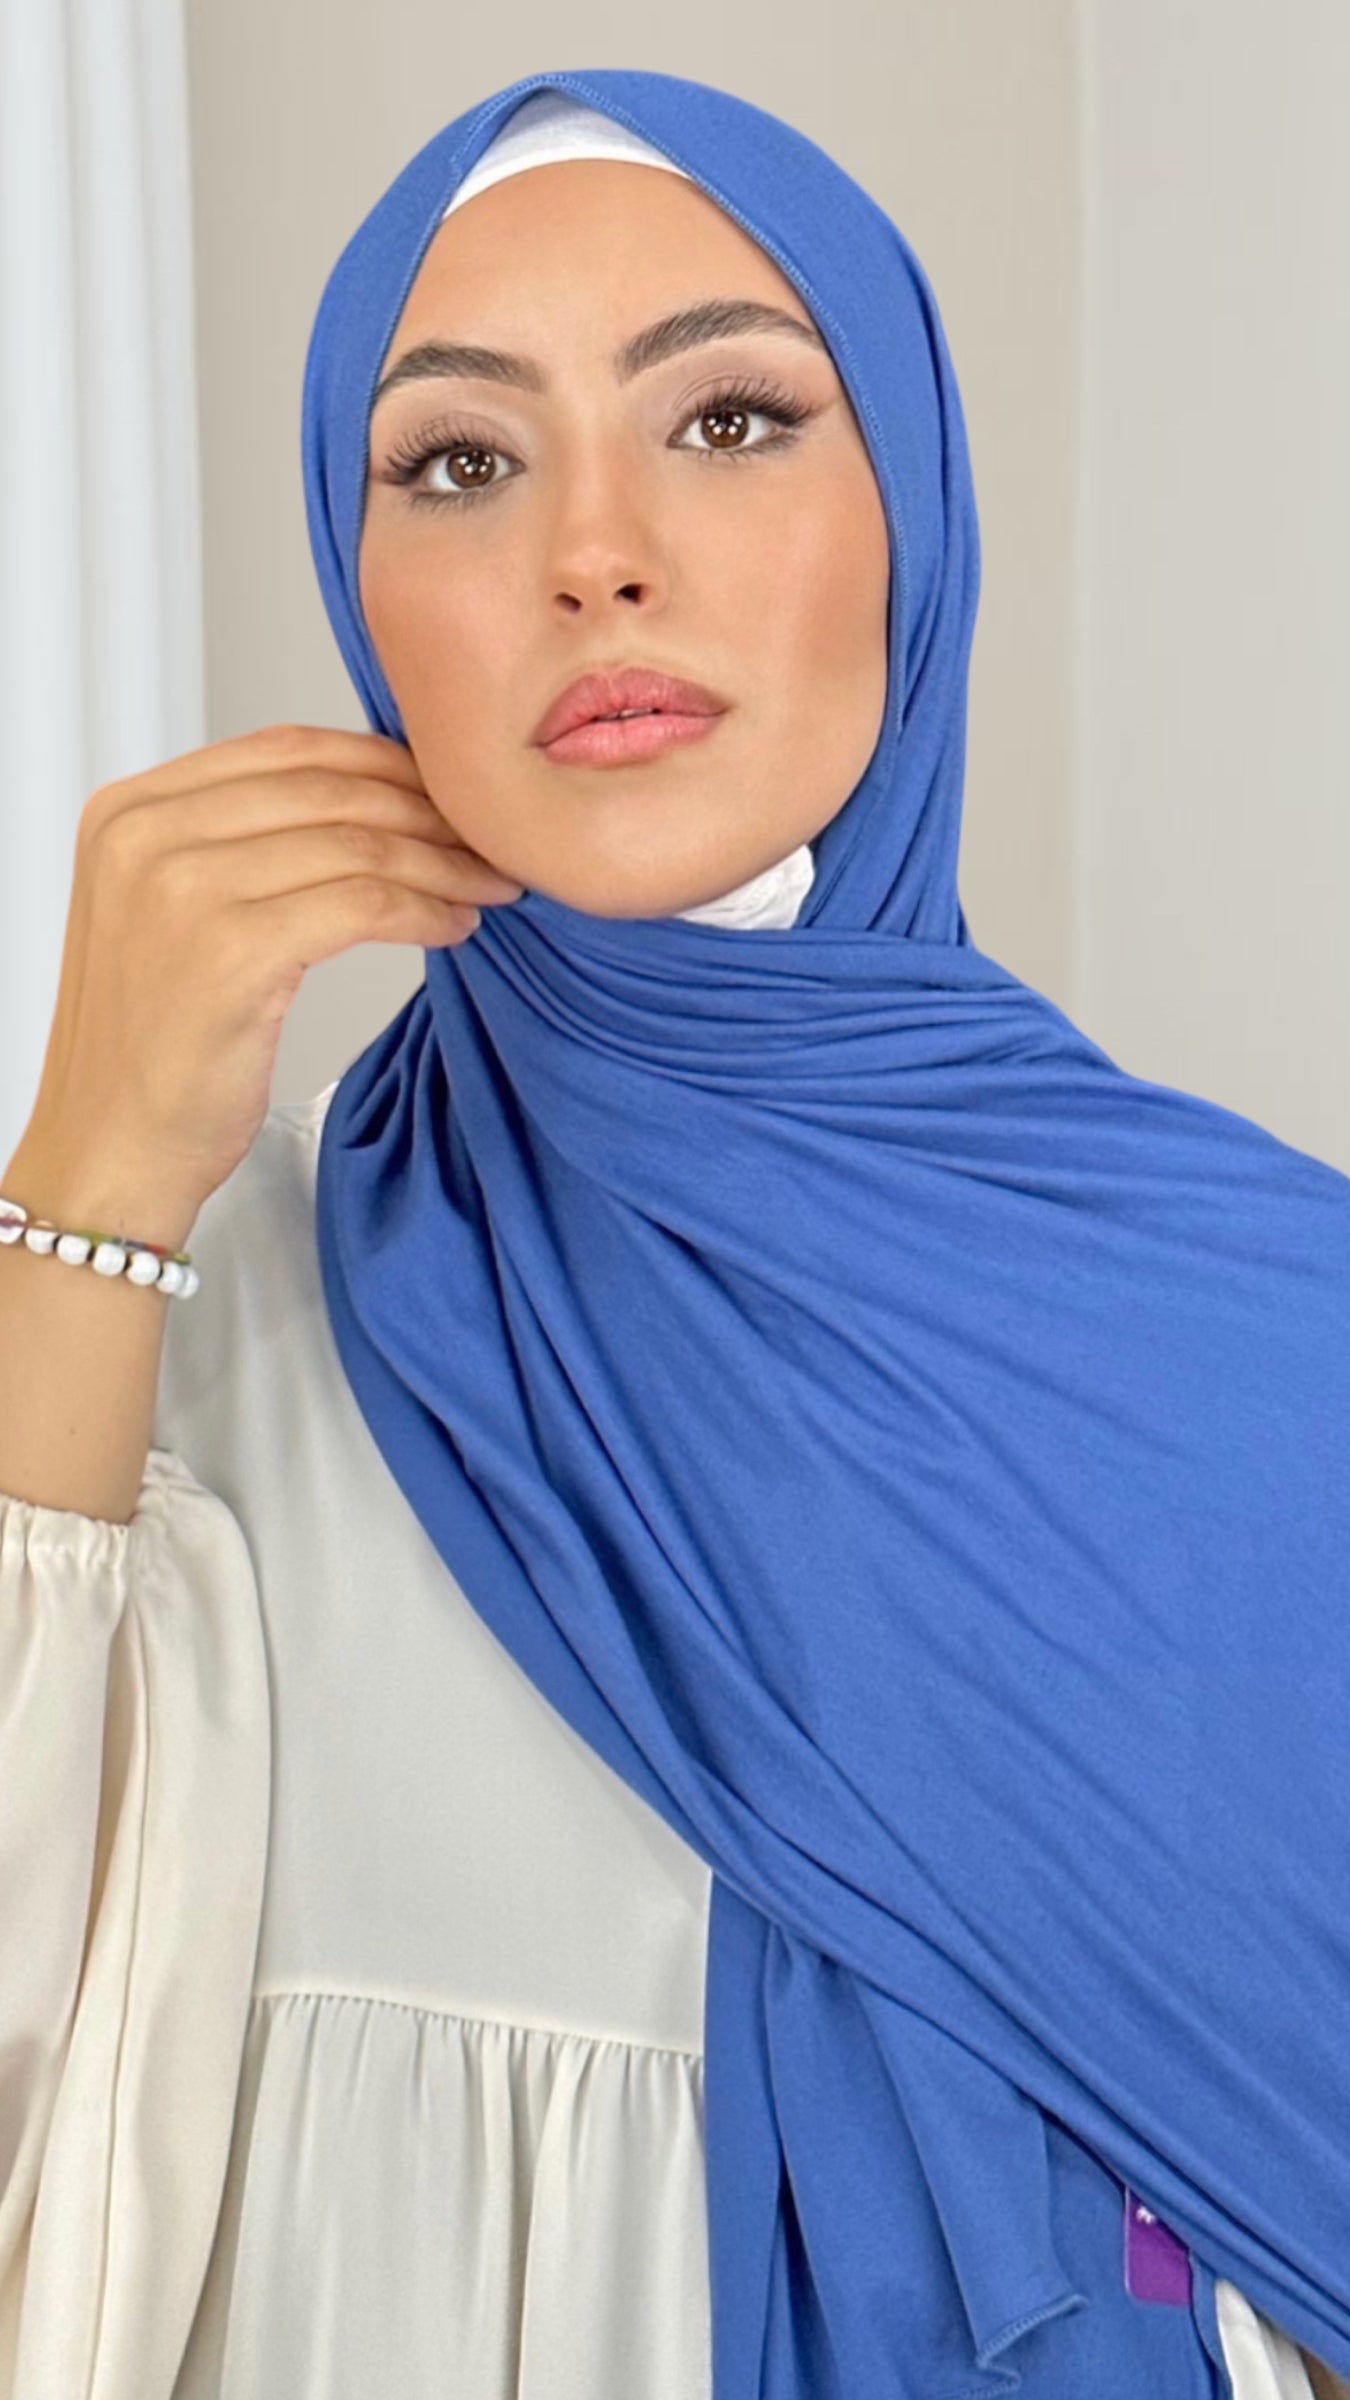 Hijab Jersey Blu cielo-orlo FlatlockHijab, chador, velo, turbante, foulard, copricapo, musulmano, islamico, sciarpa, 